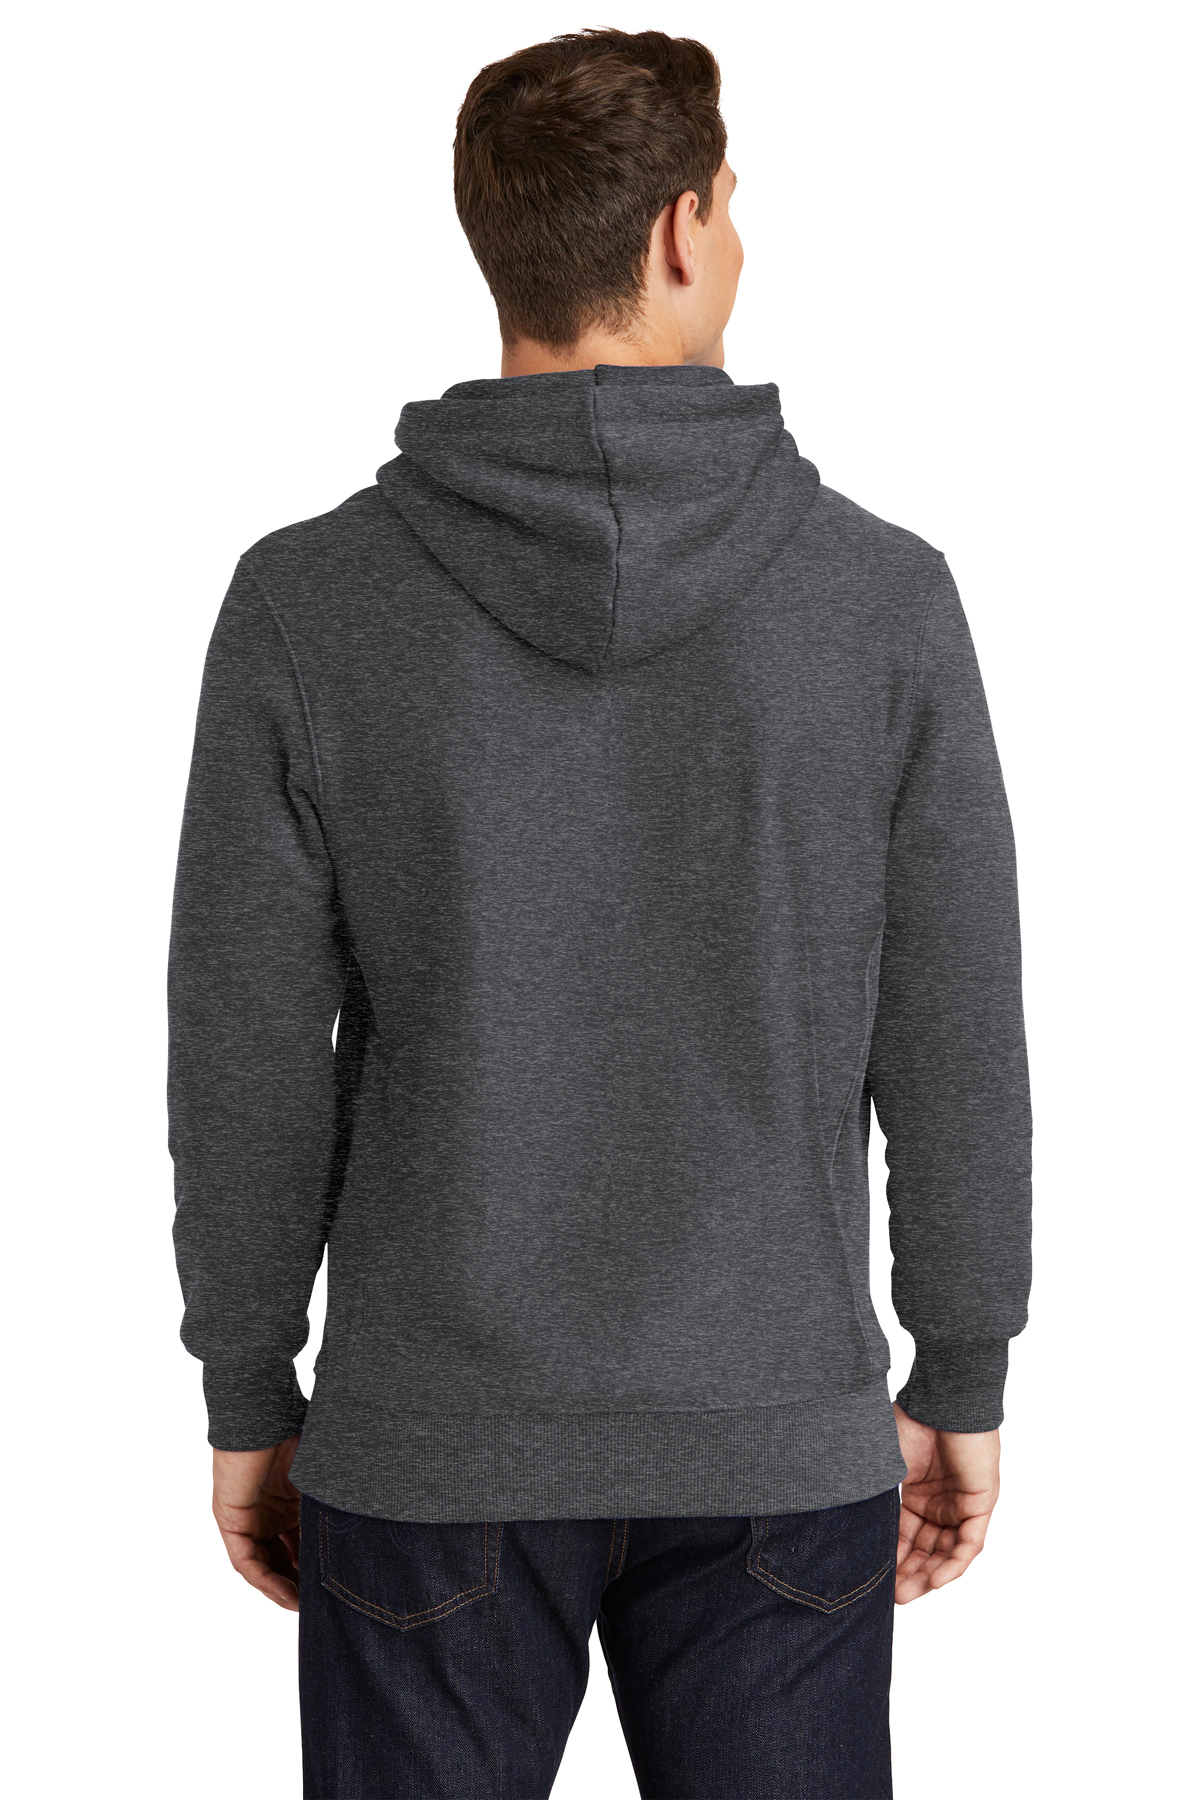 Super Sweatshirt Pullover Sport-Tek Product Heavyweight | | Hooded Sport-Tek